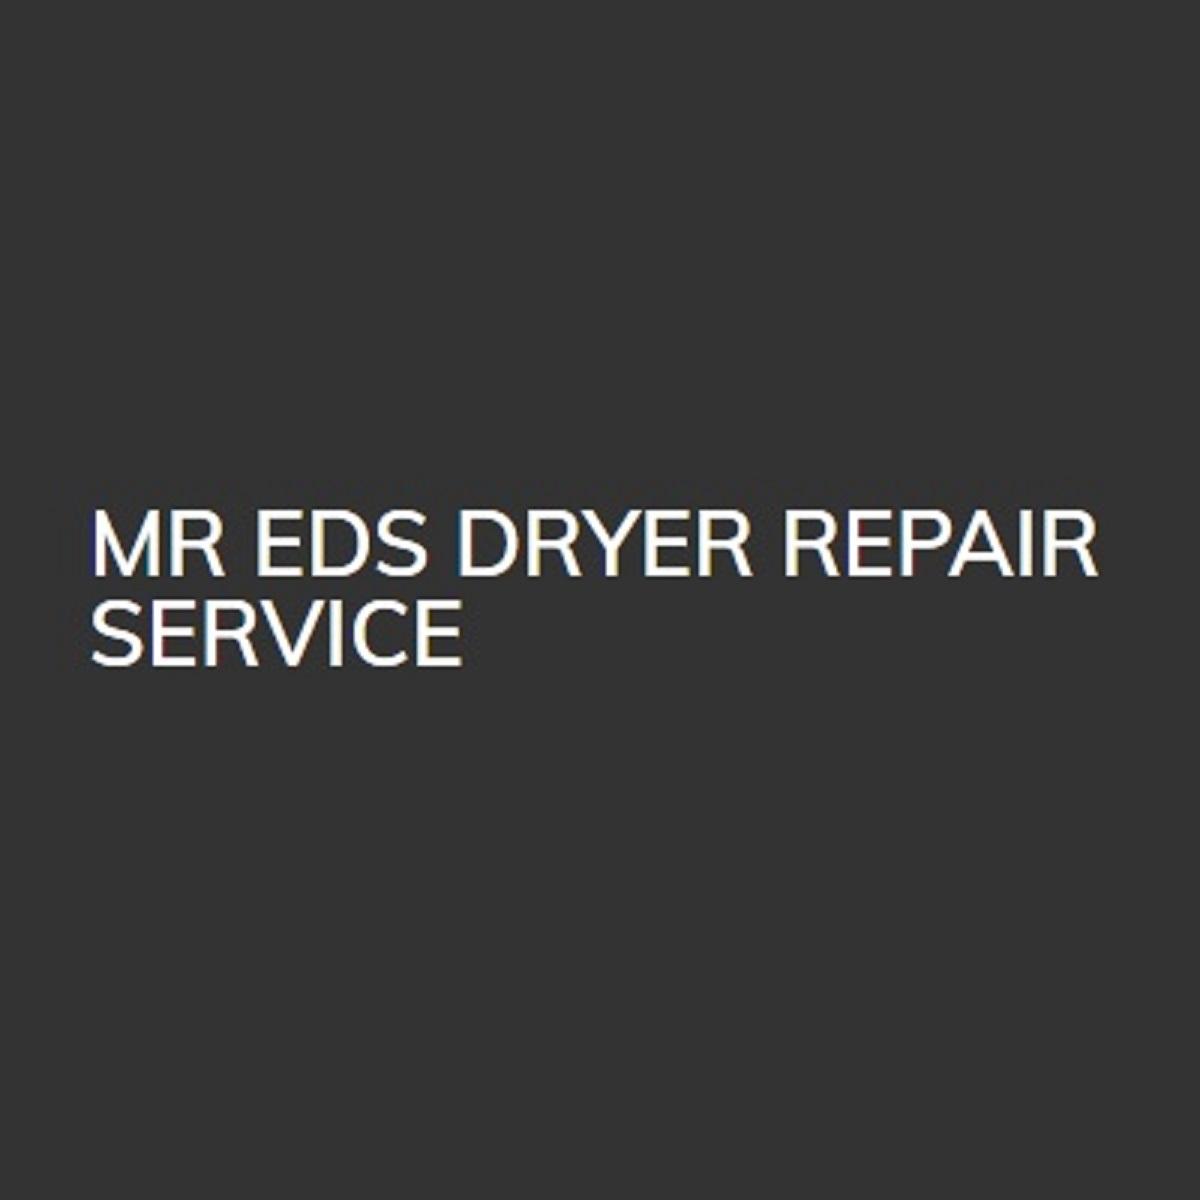 MrEdsDryer RepairService